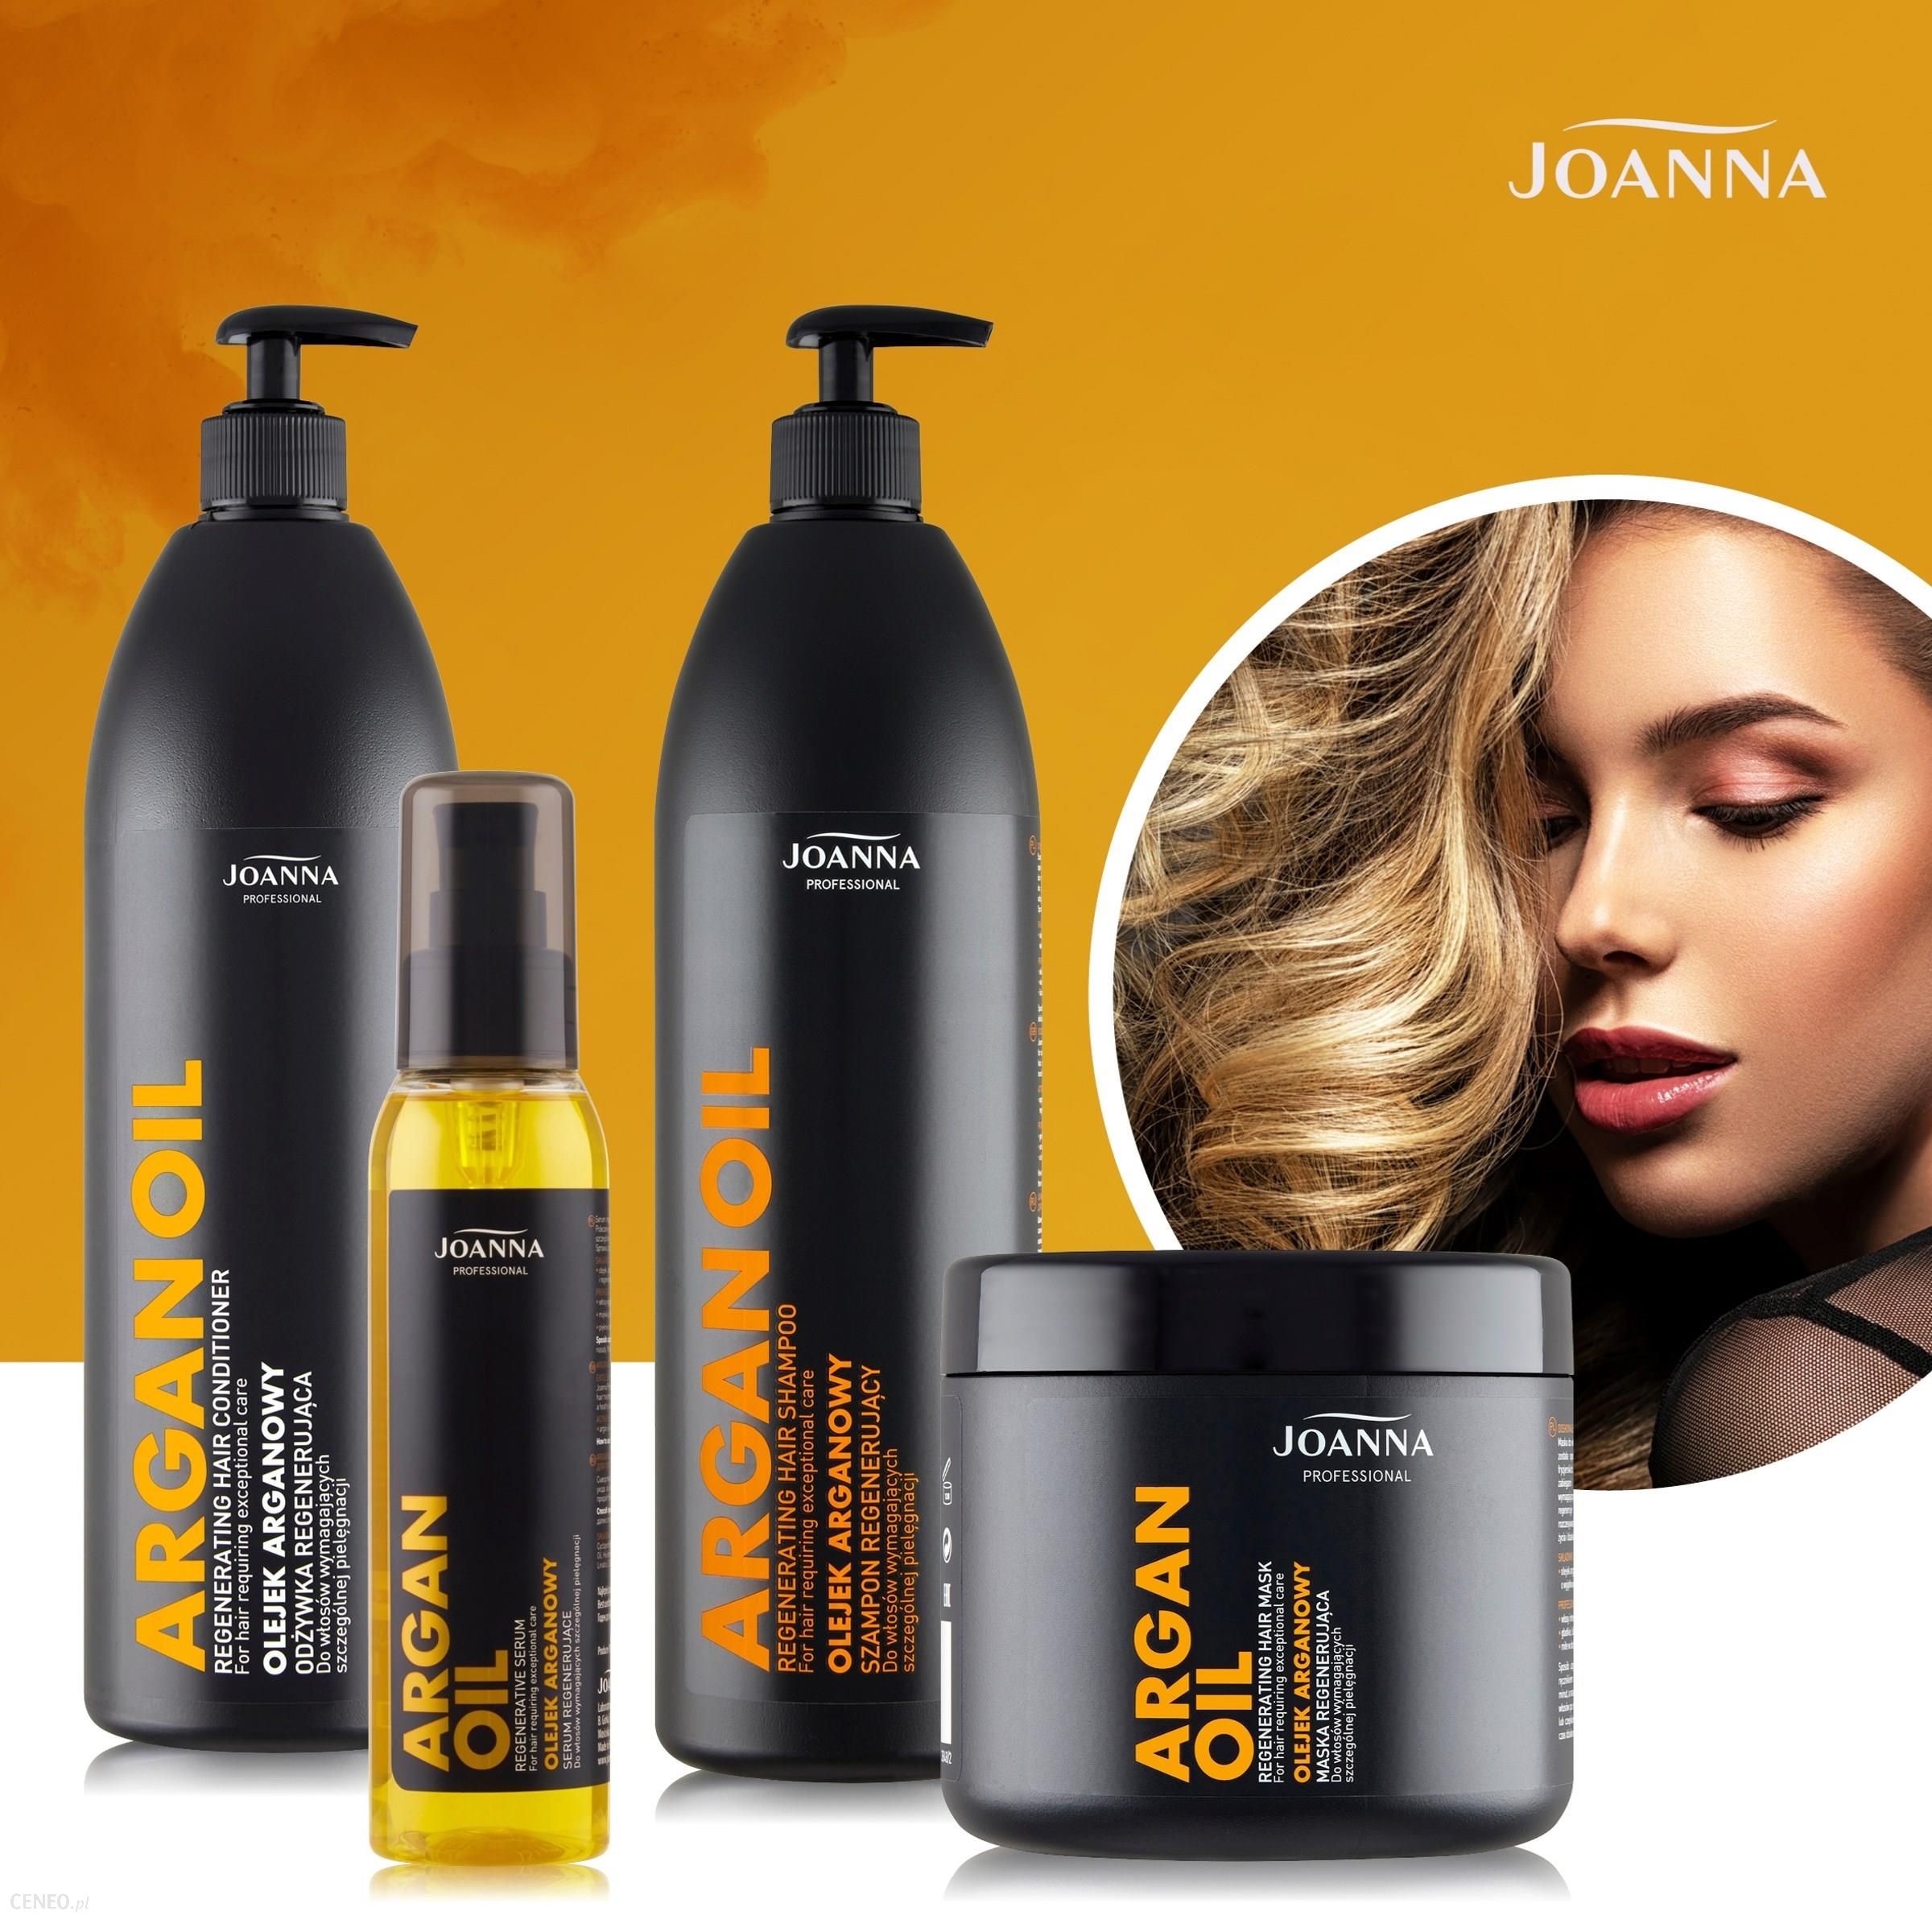 joanna professional szampon argan oil opinie